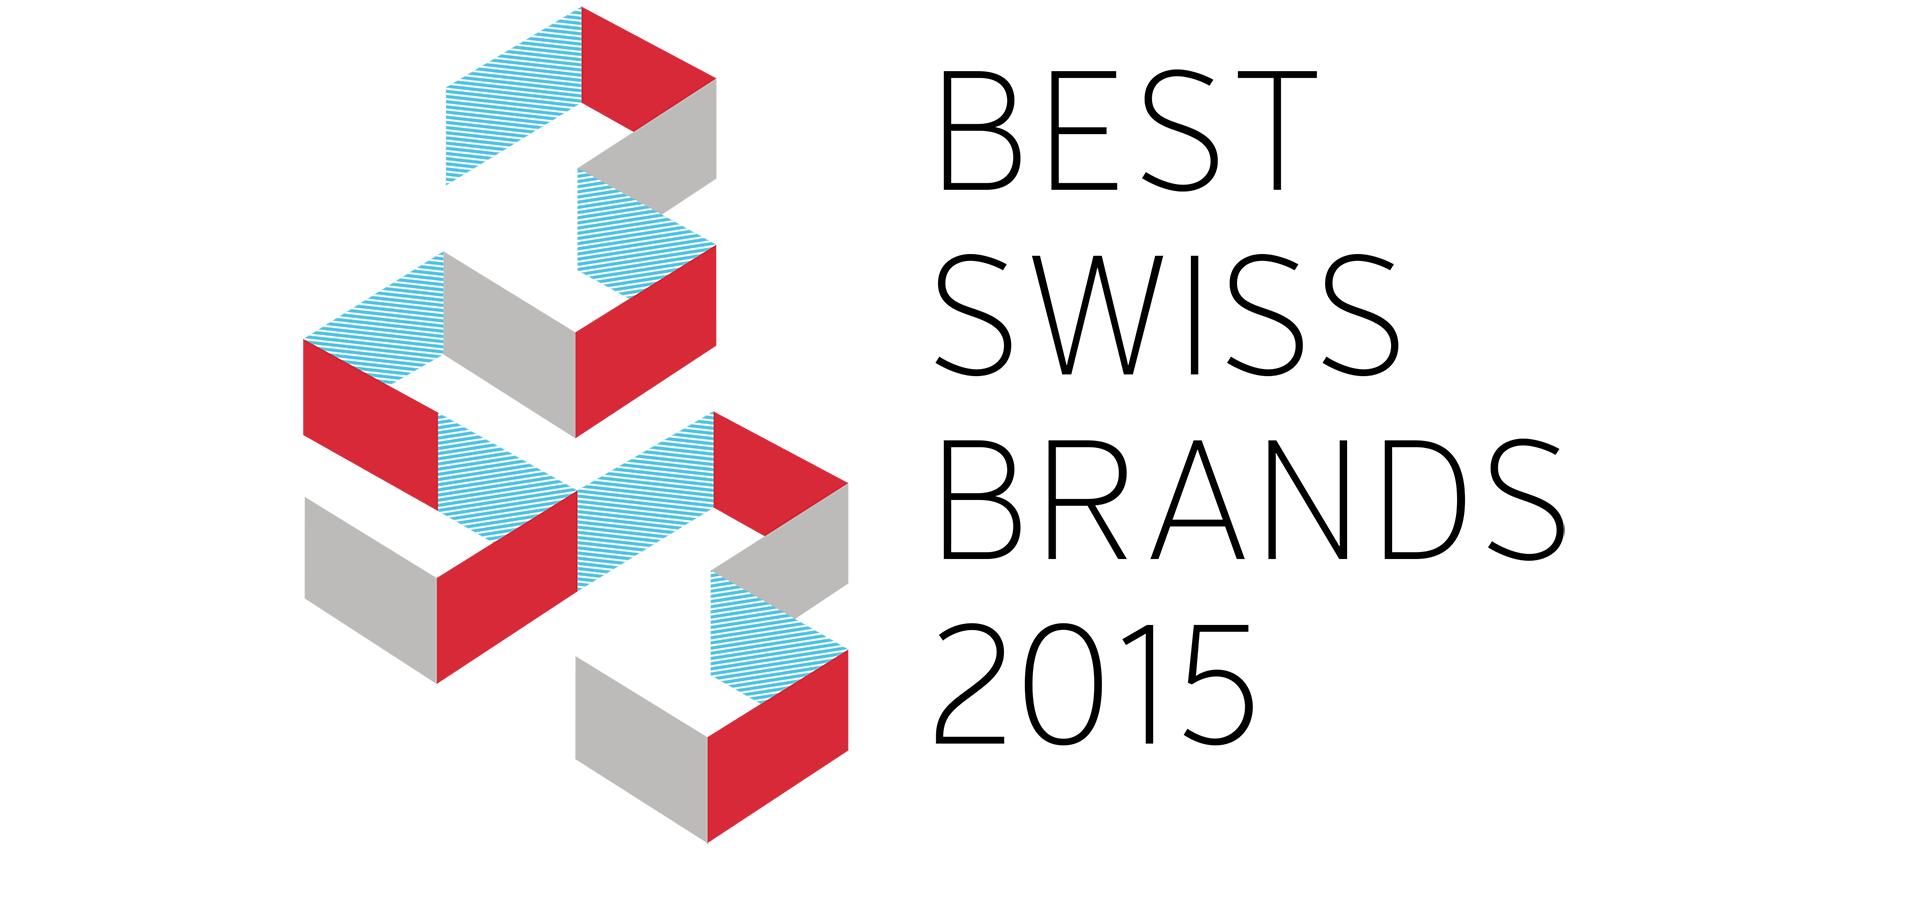 Best Swiss Brands 2015